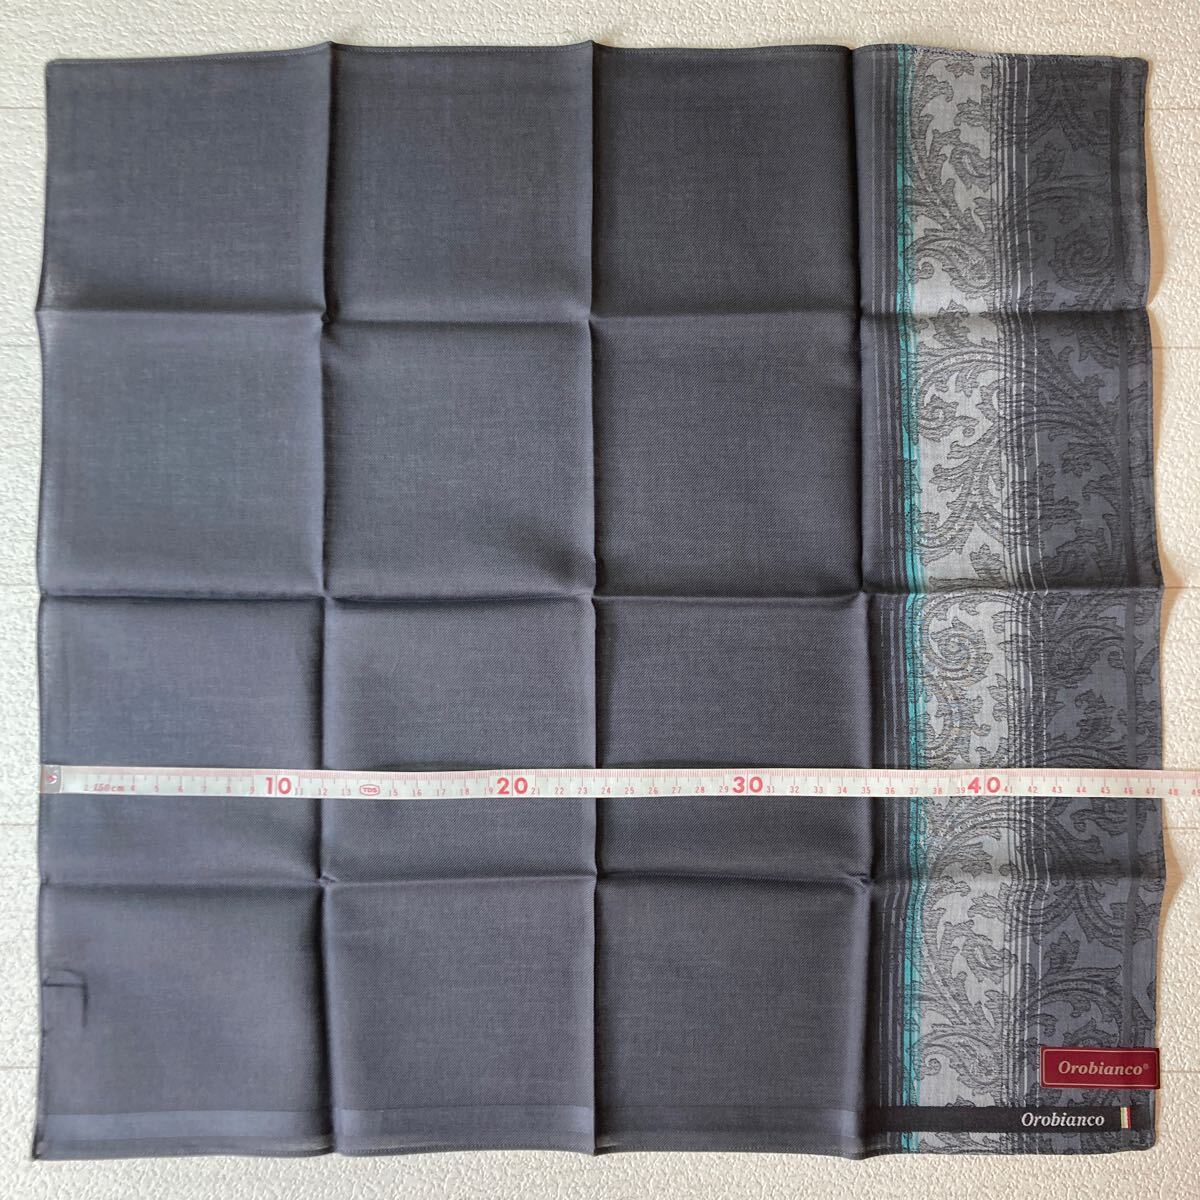  unused Orobianco handkerchie 3 sheets summarize Brown gray navy 04020601